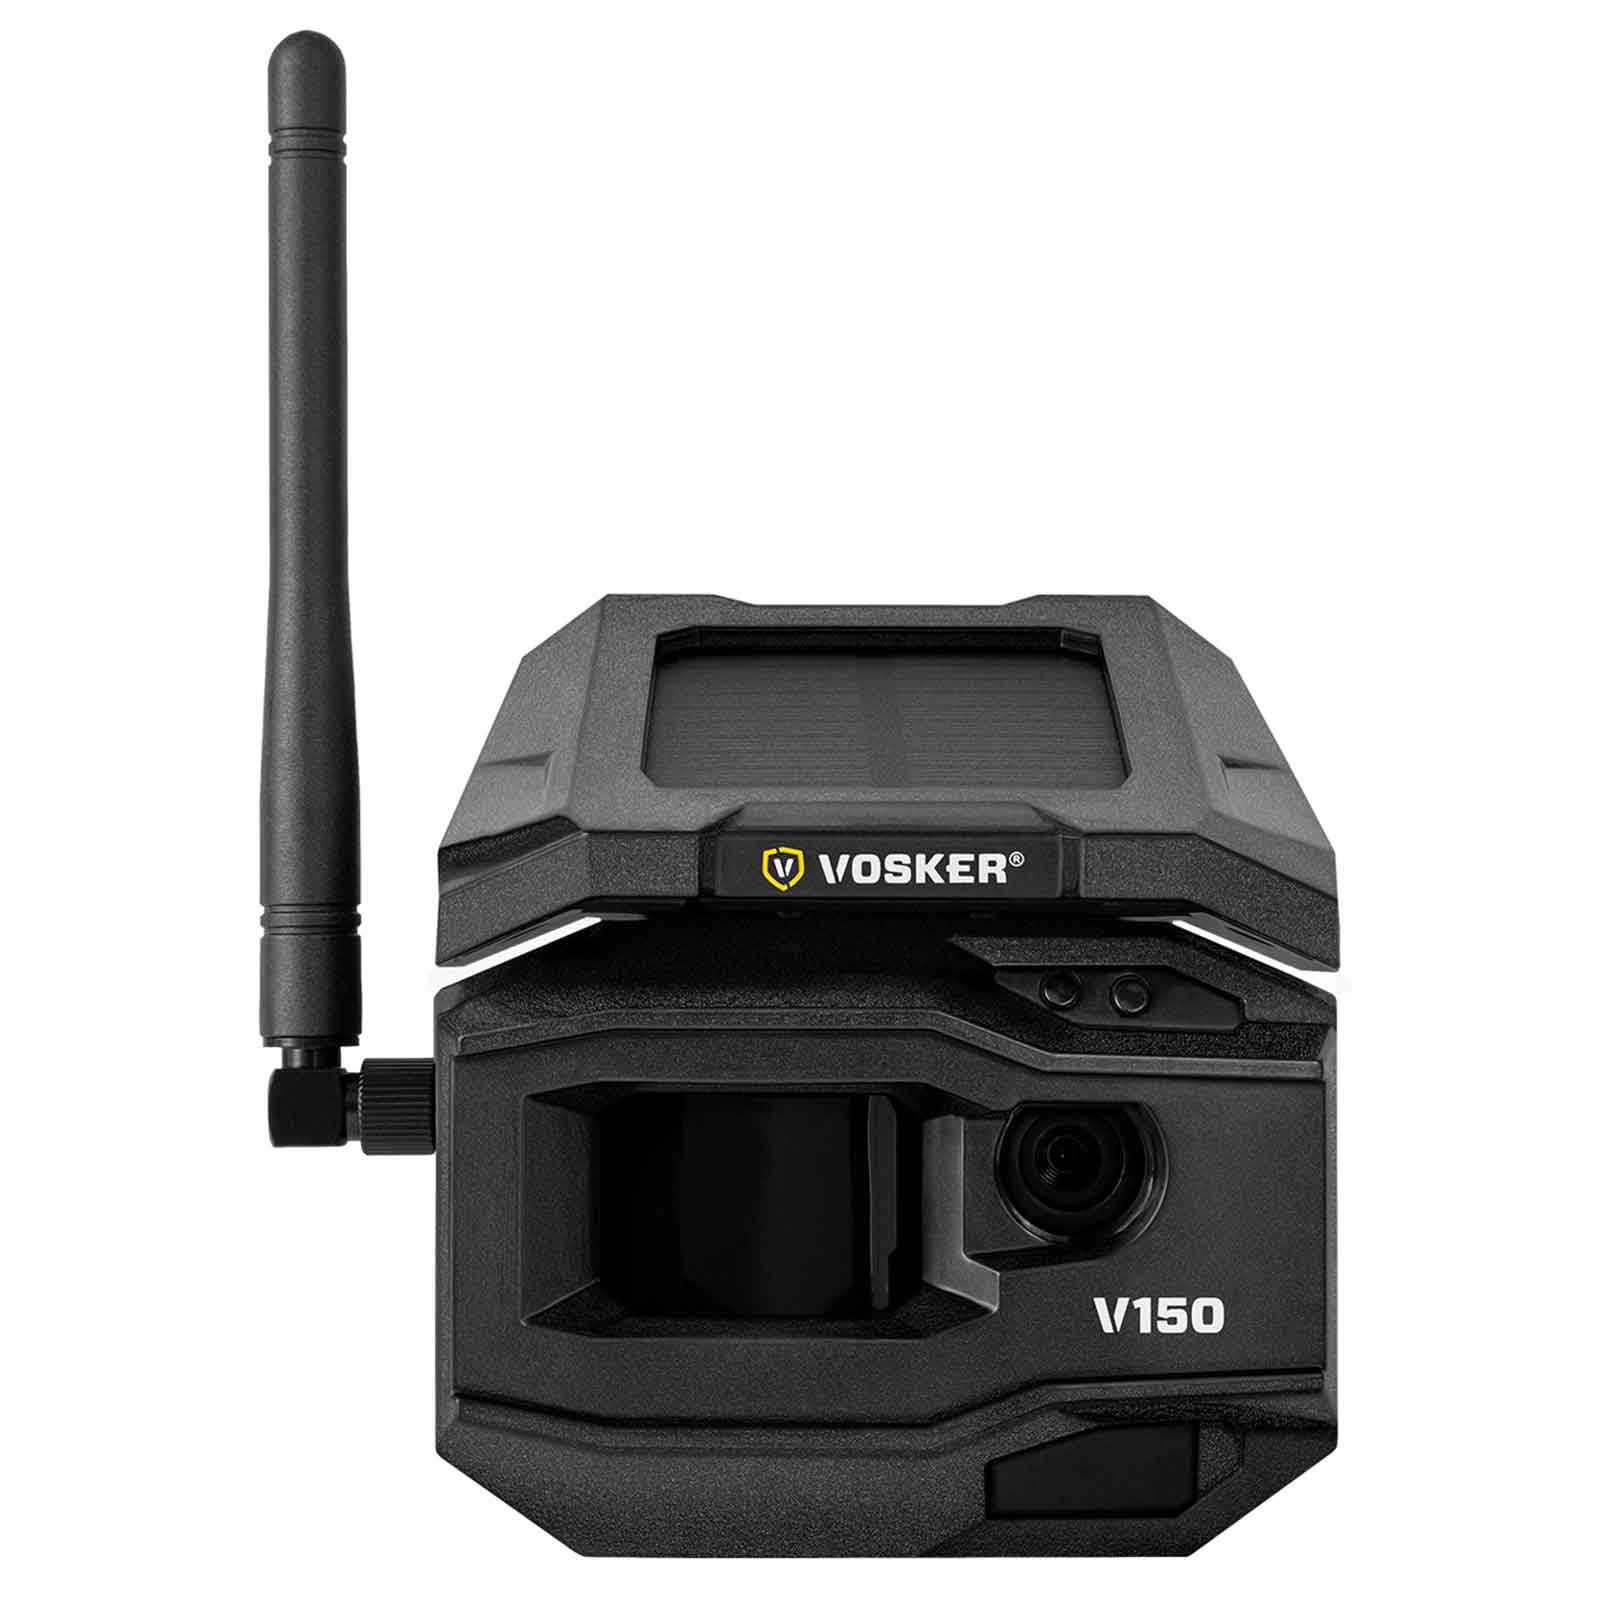 Vosker V150 surveillance camera